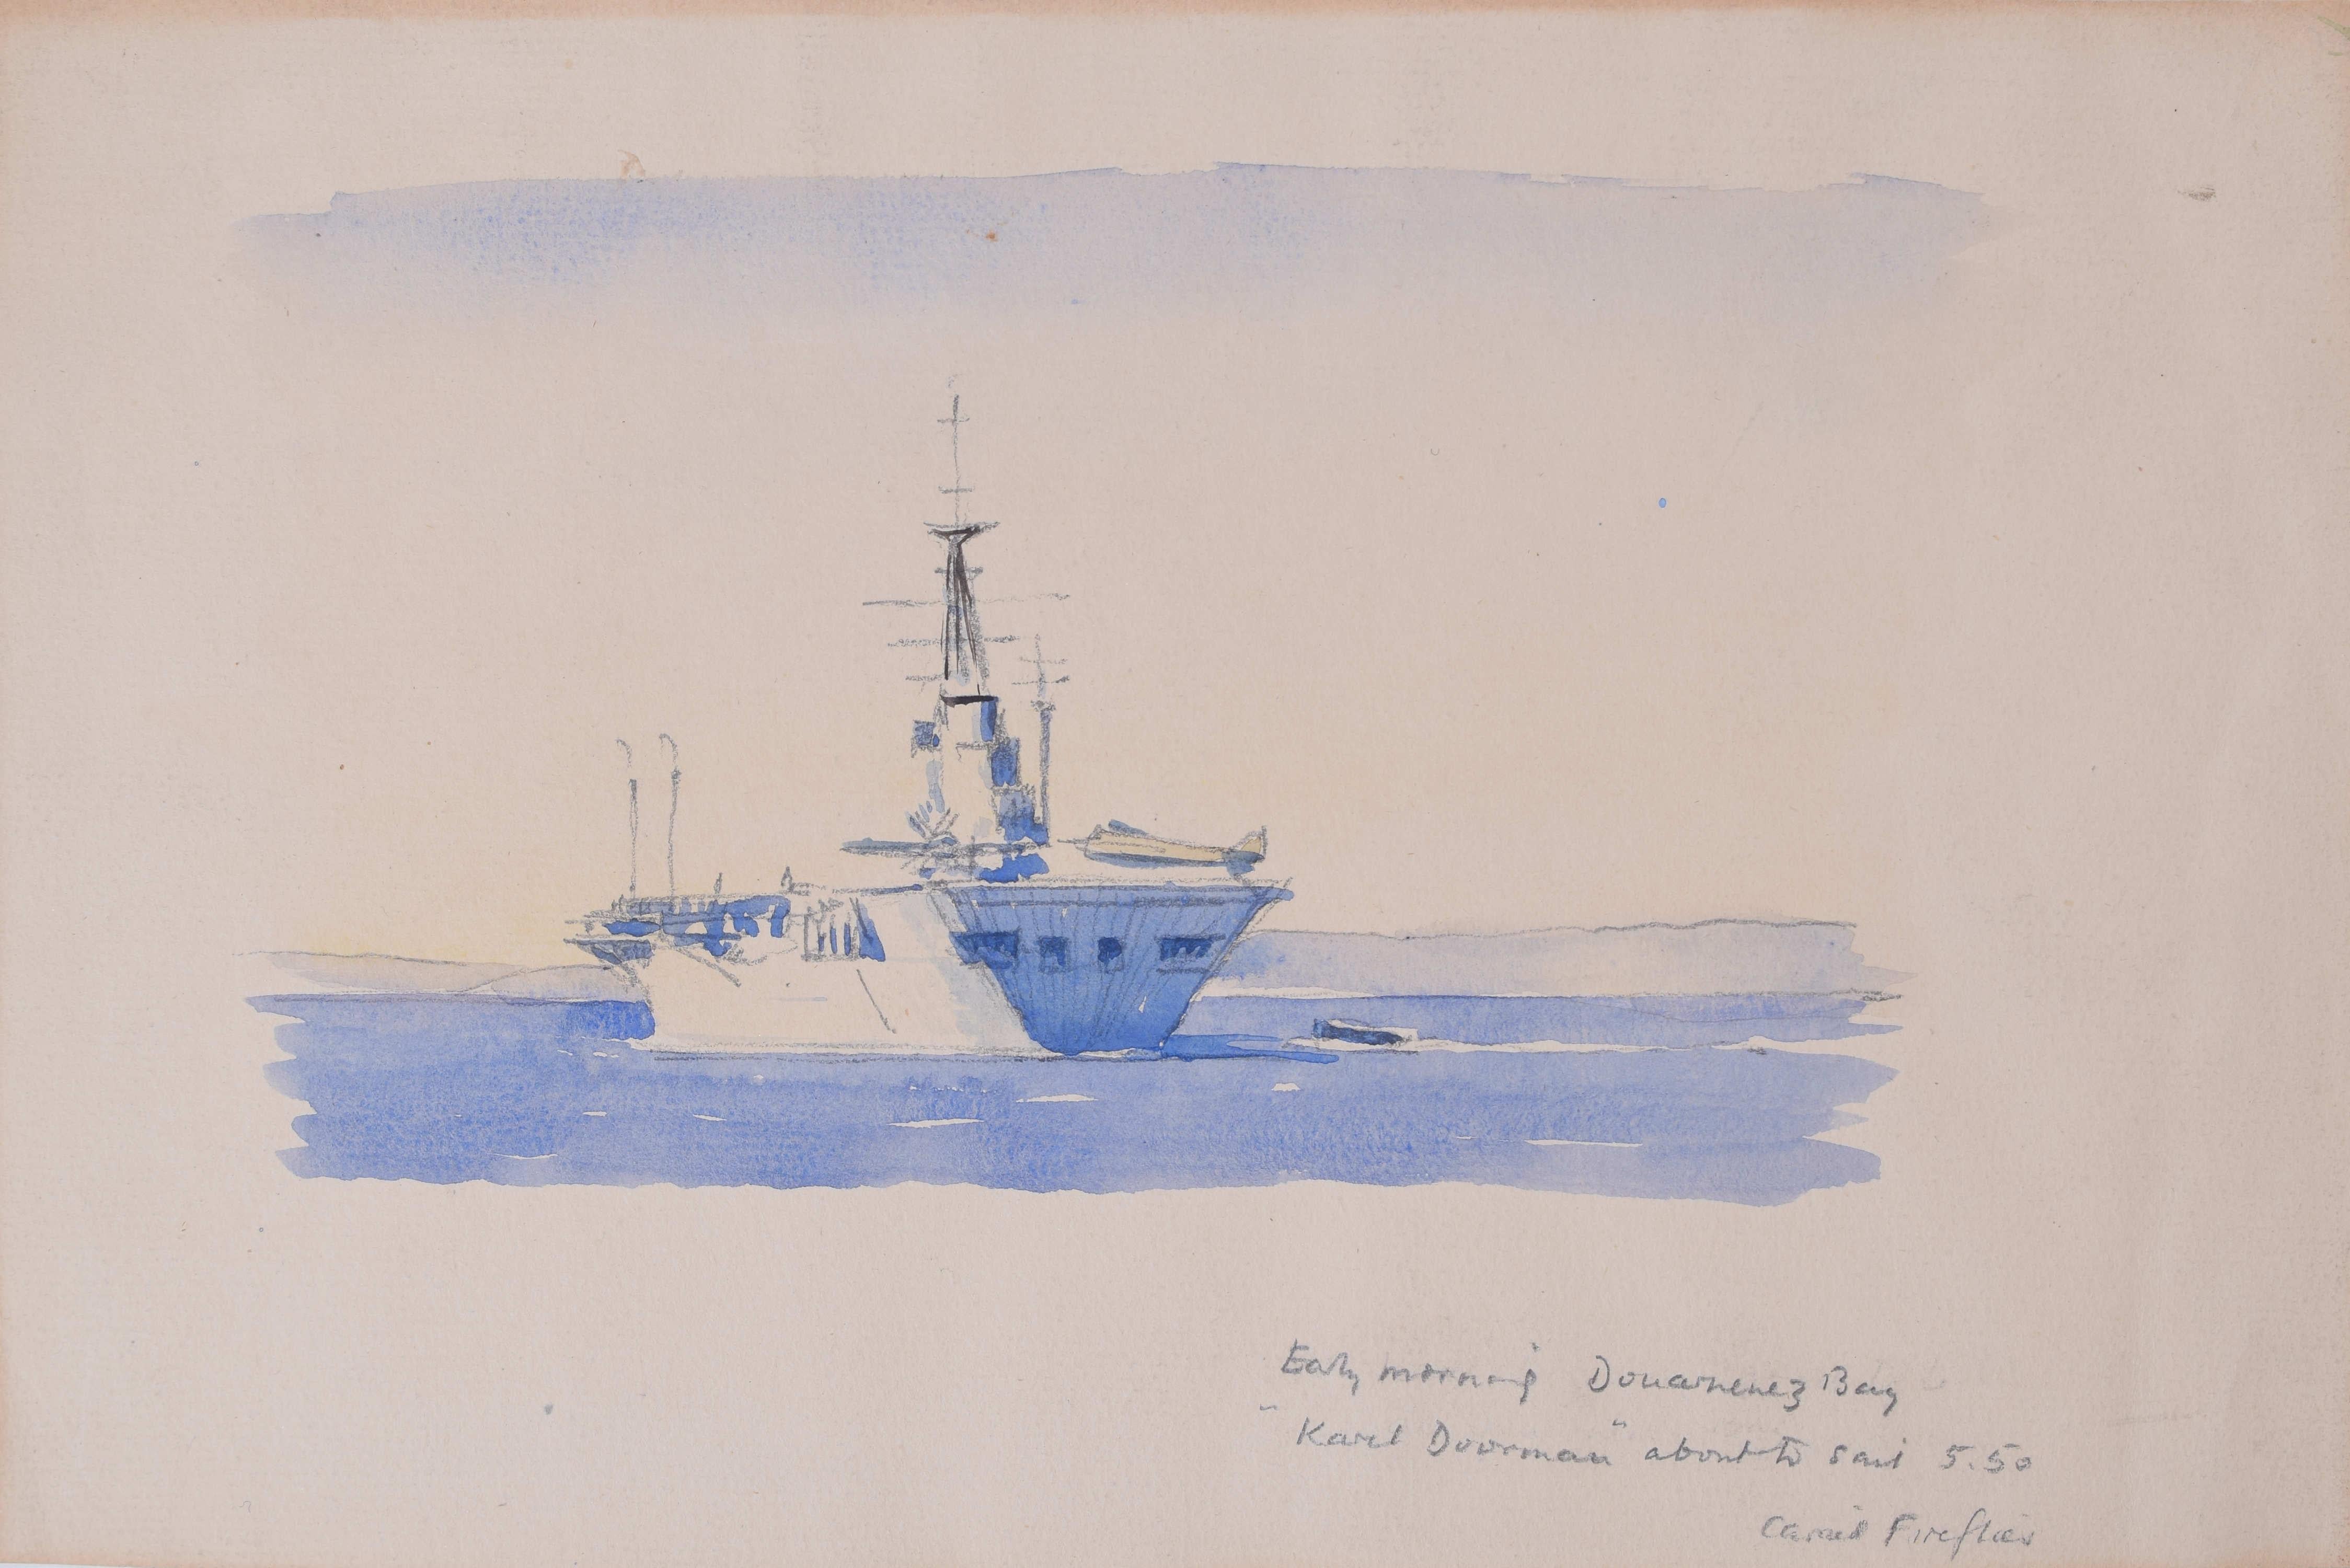 Laurence Dunn : Karel Doorman (R81) aquarelle de navire de la marine hollandaise